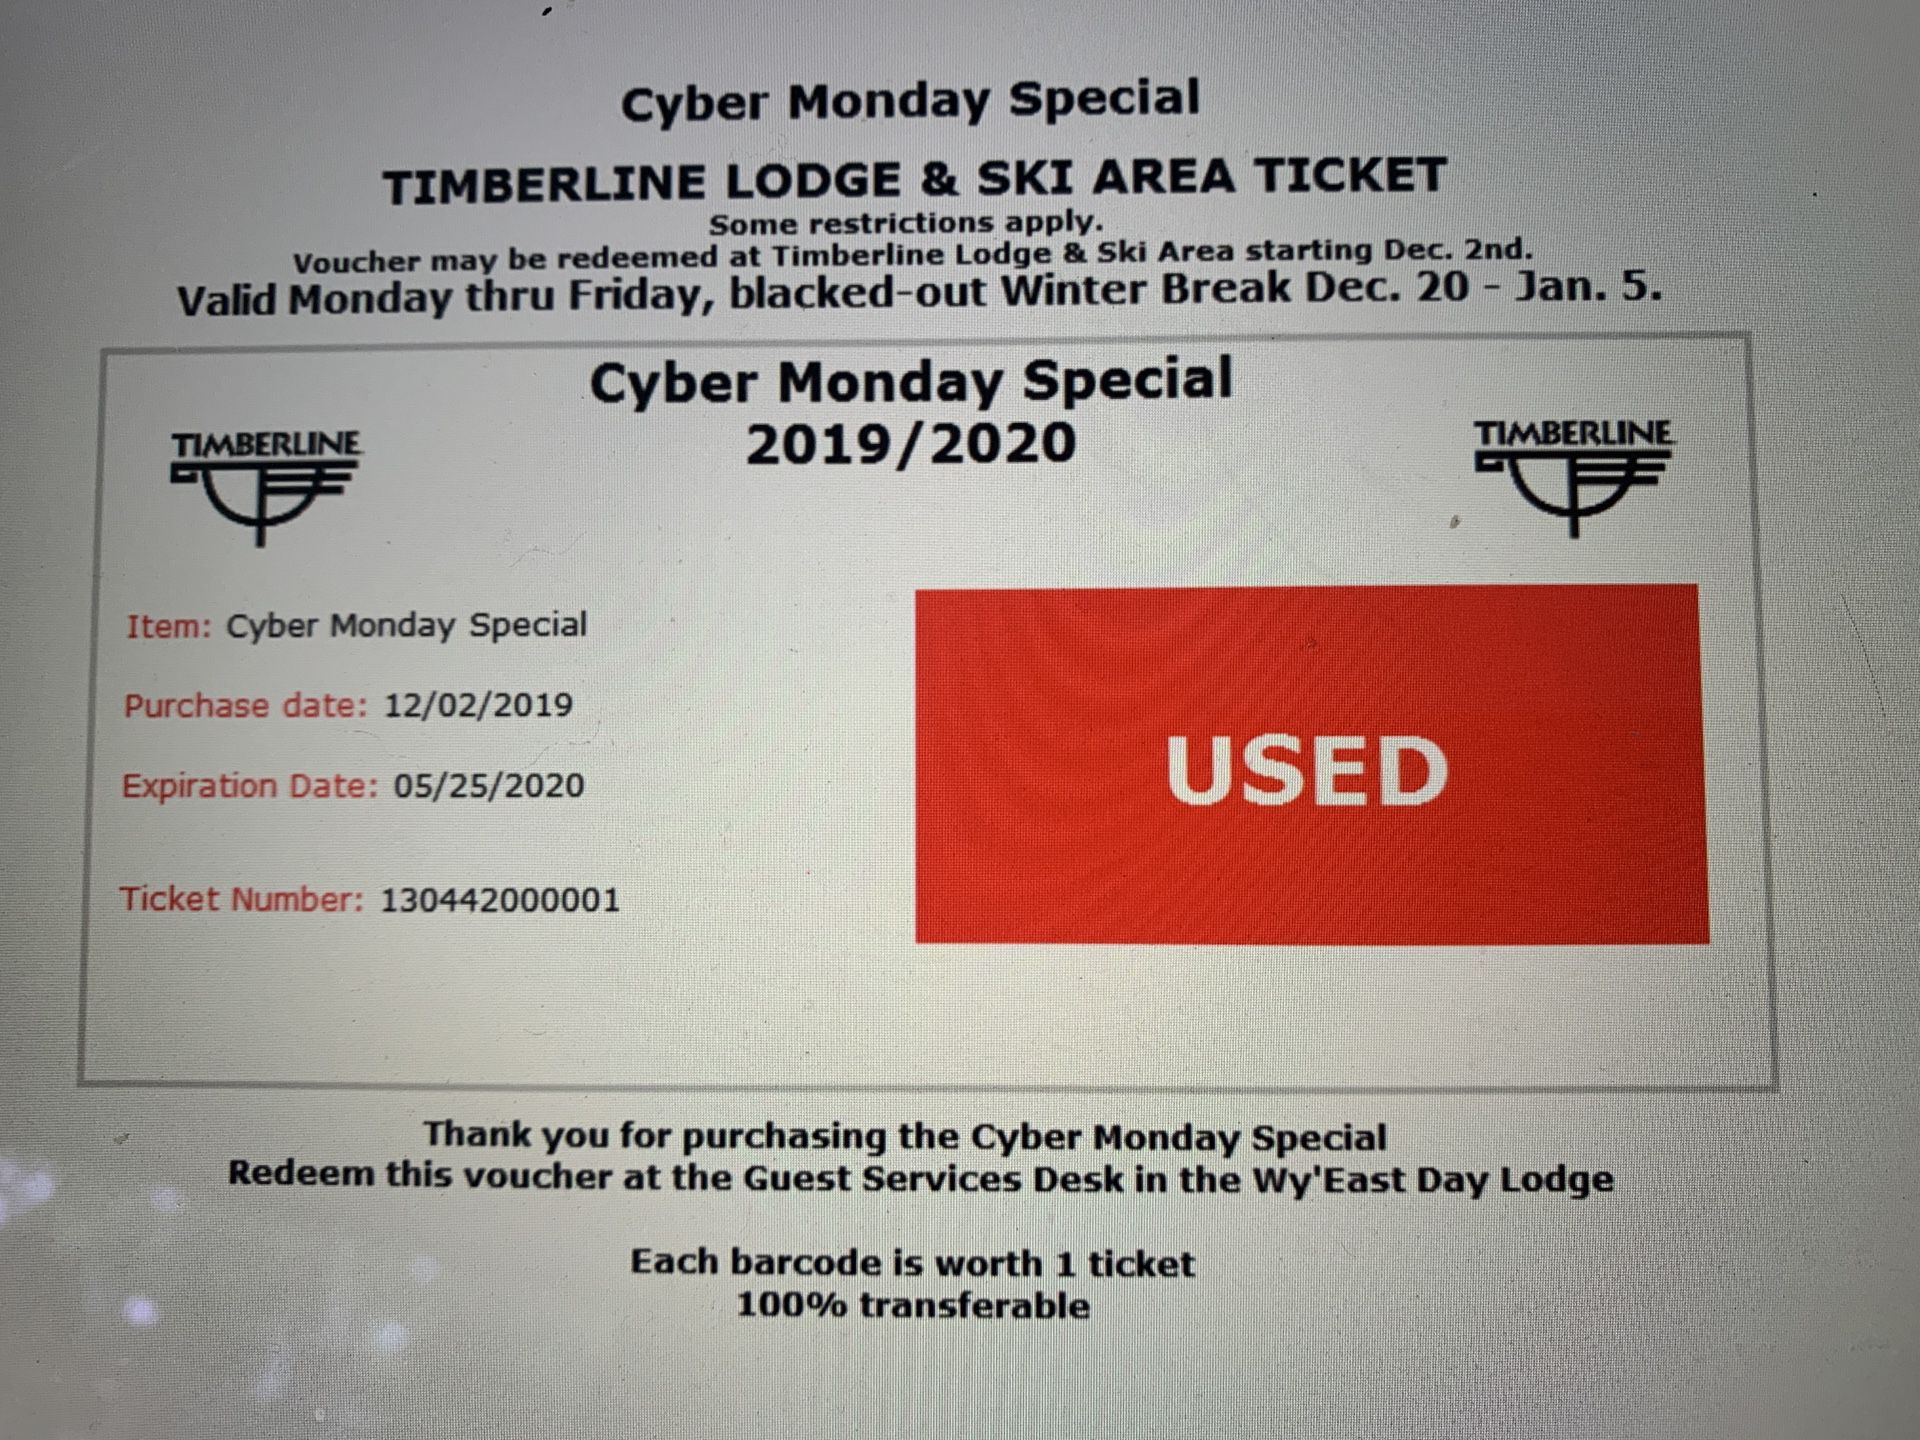 Weekday timberline tickets